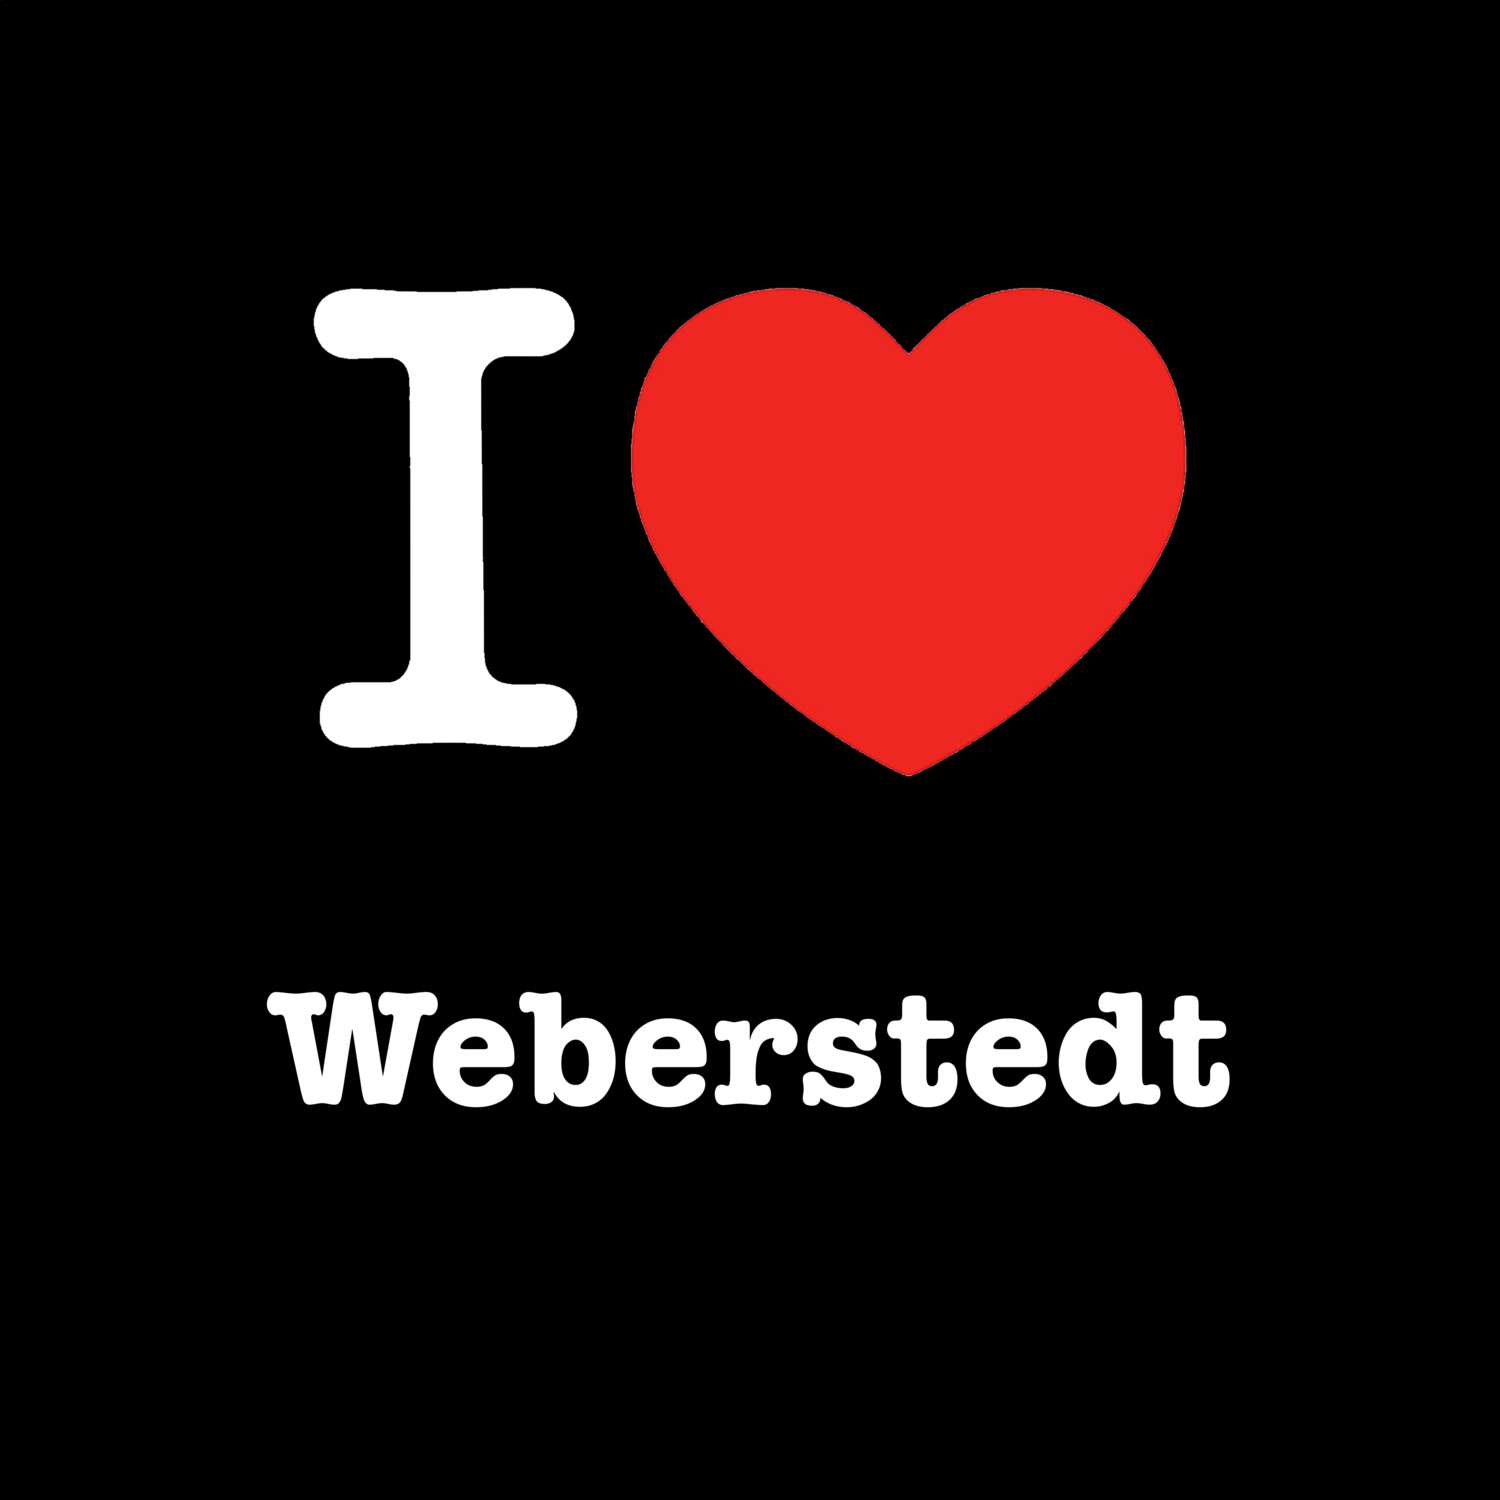 Weberstedt T-Shirt »I love«